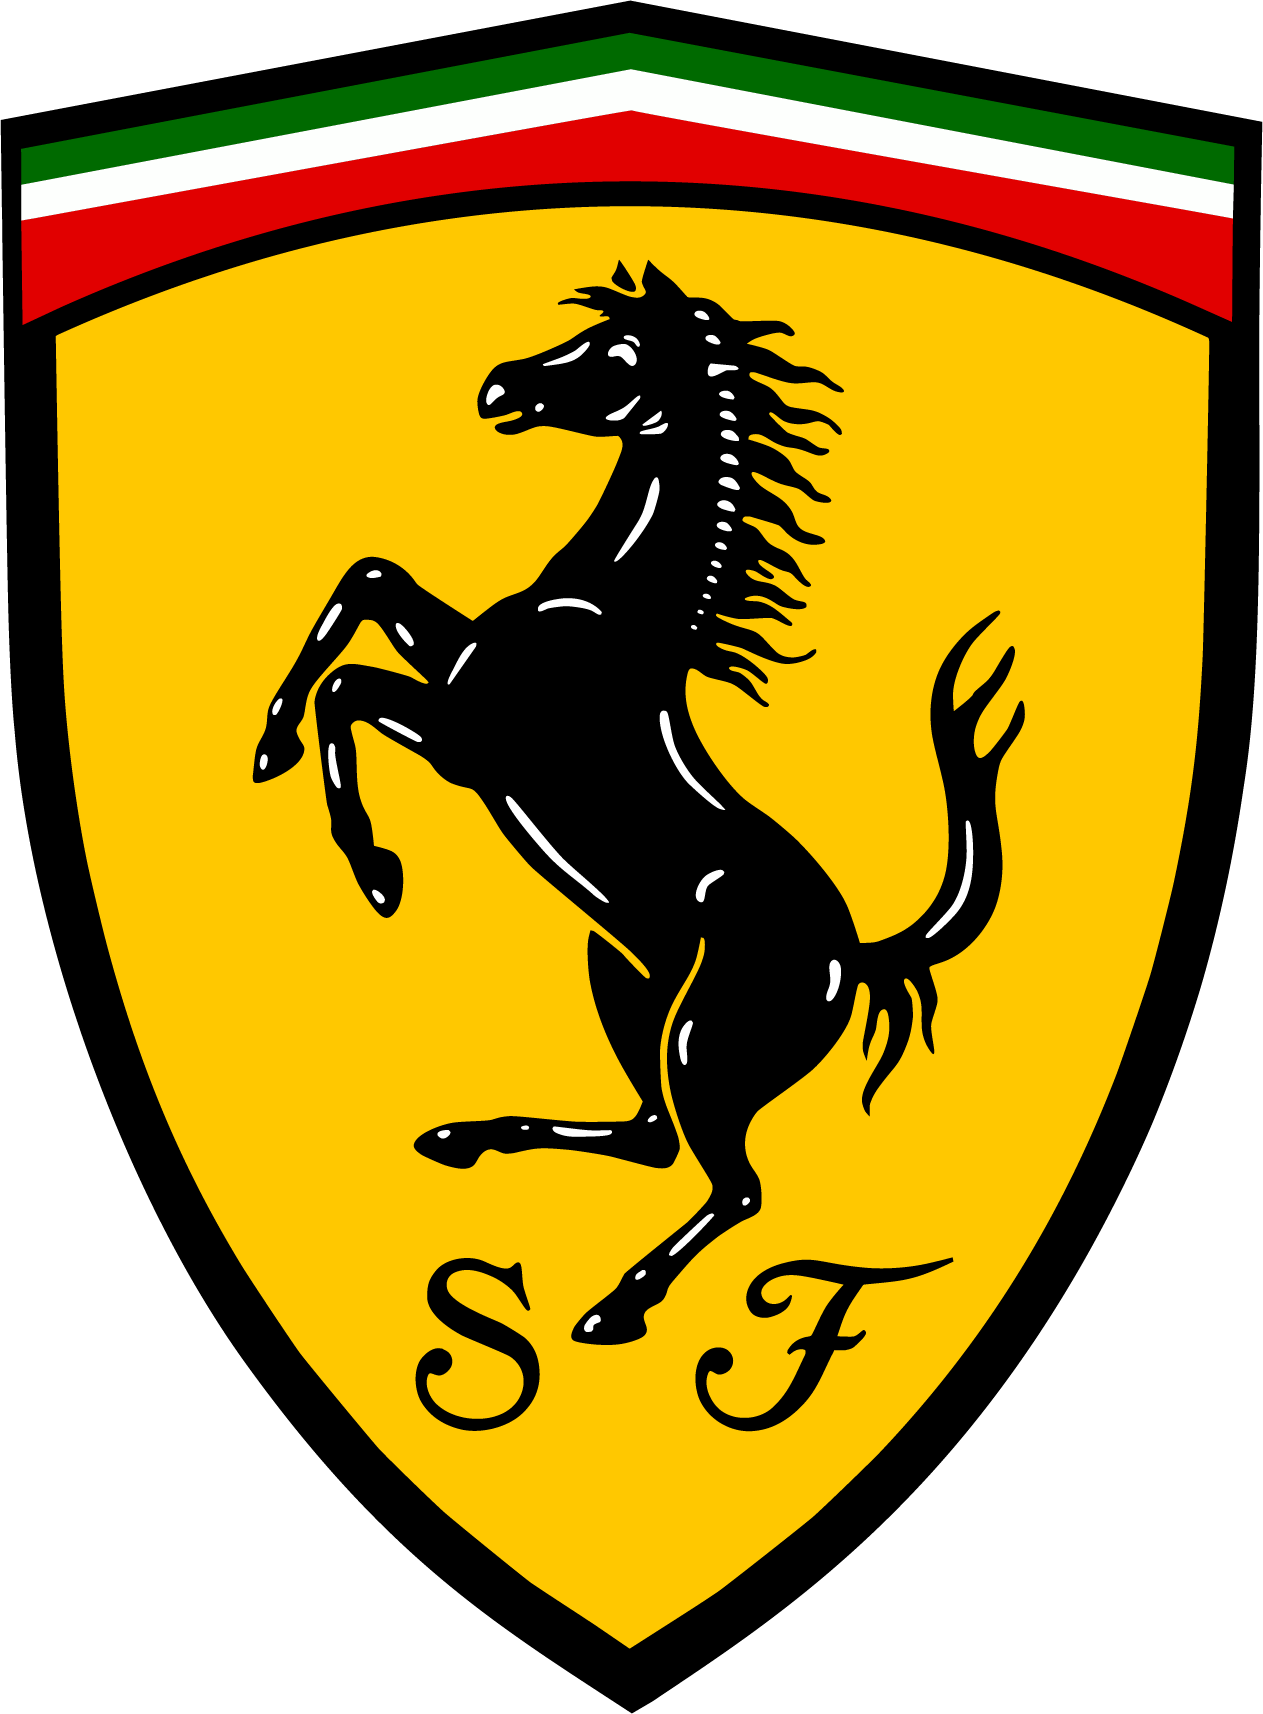 Stickers logo Ferrari-prix mini